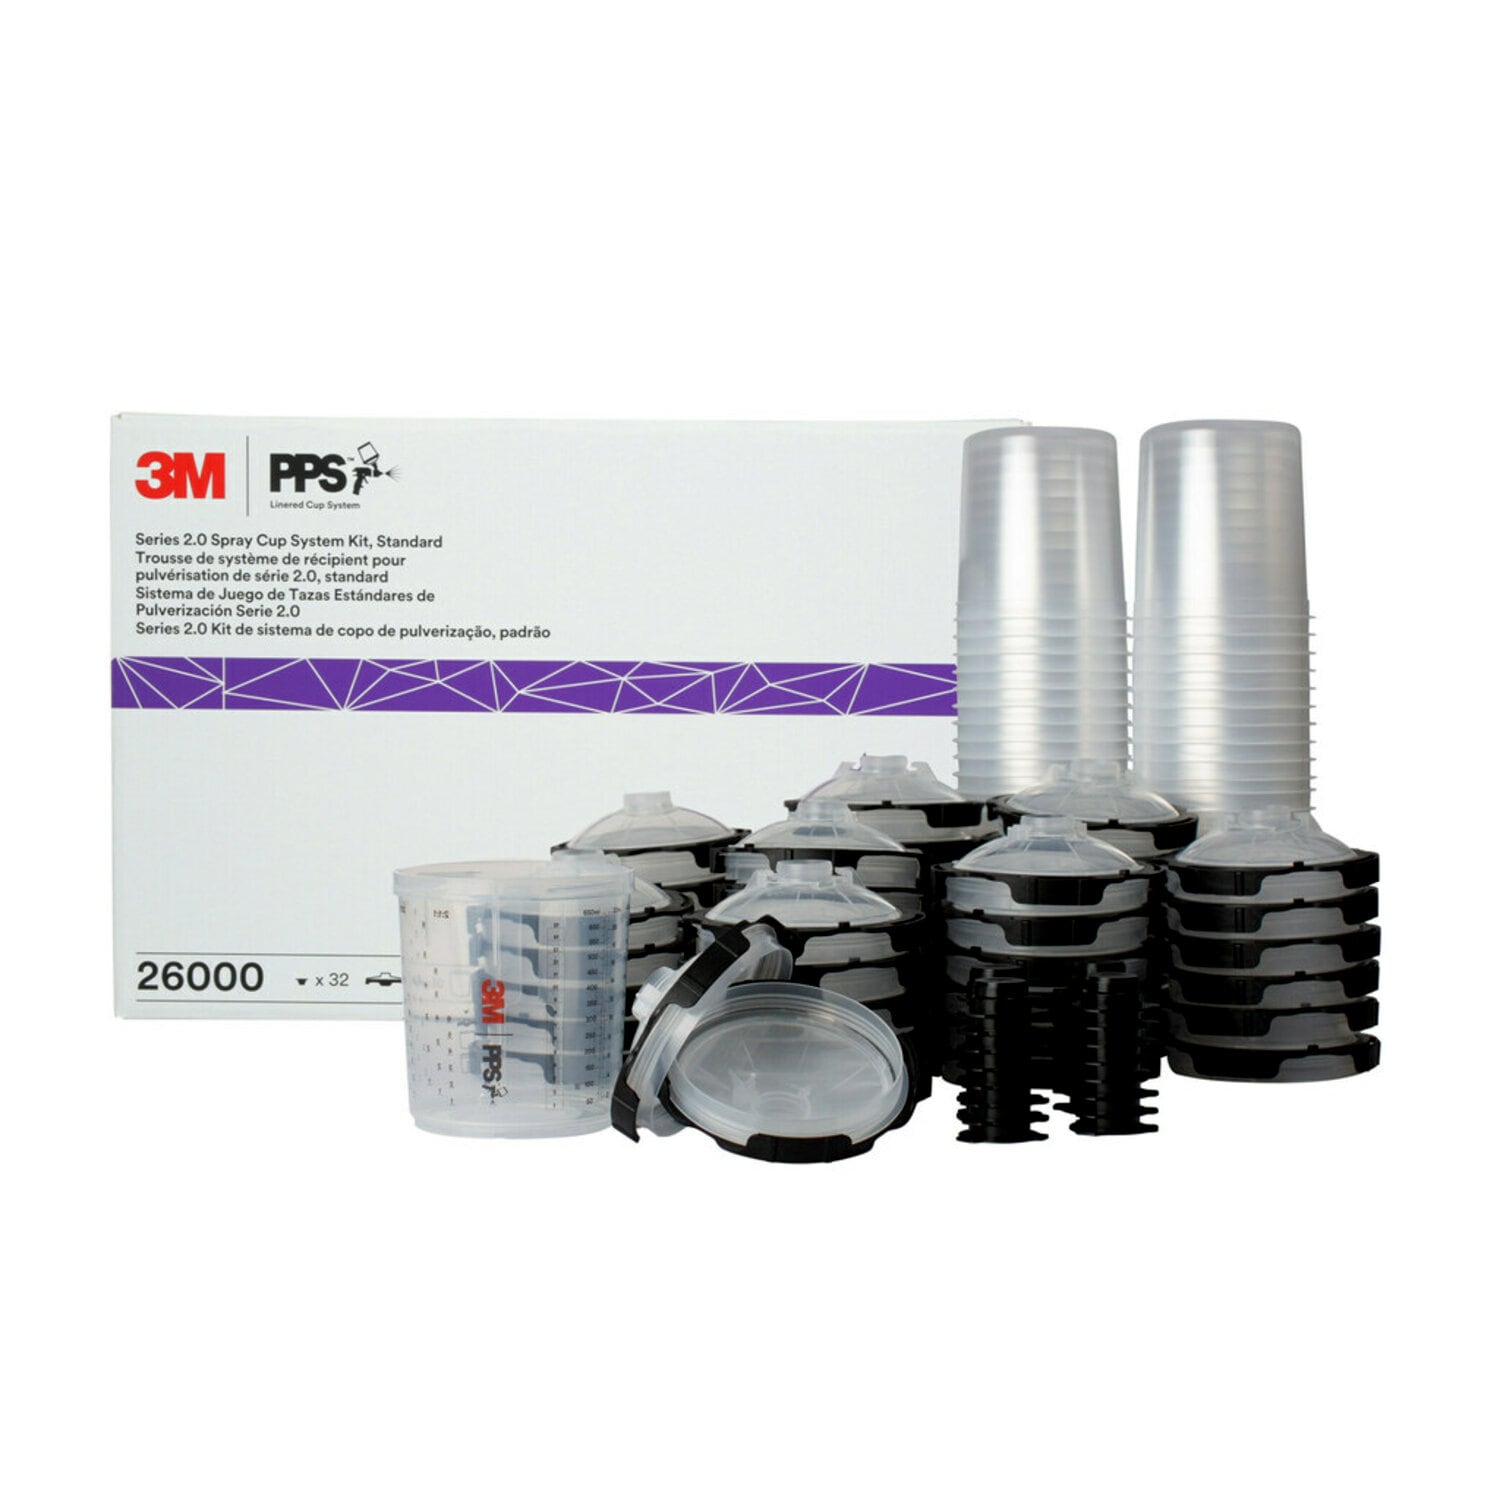 7100134641 - 3M PPS Series 2.0 Spray Cup System Kit 26000, Standard (22 fl oz, 650
mL), 200 Micron Filter, 1 Kit/Case